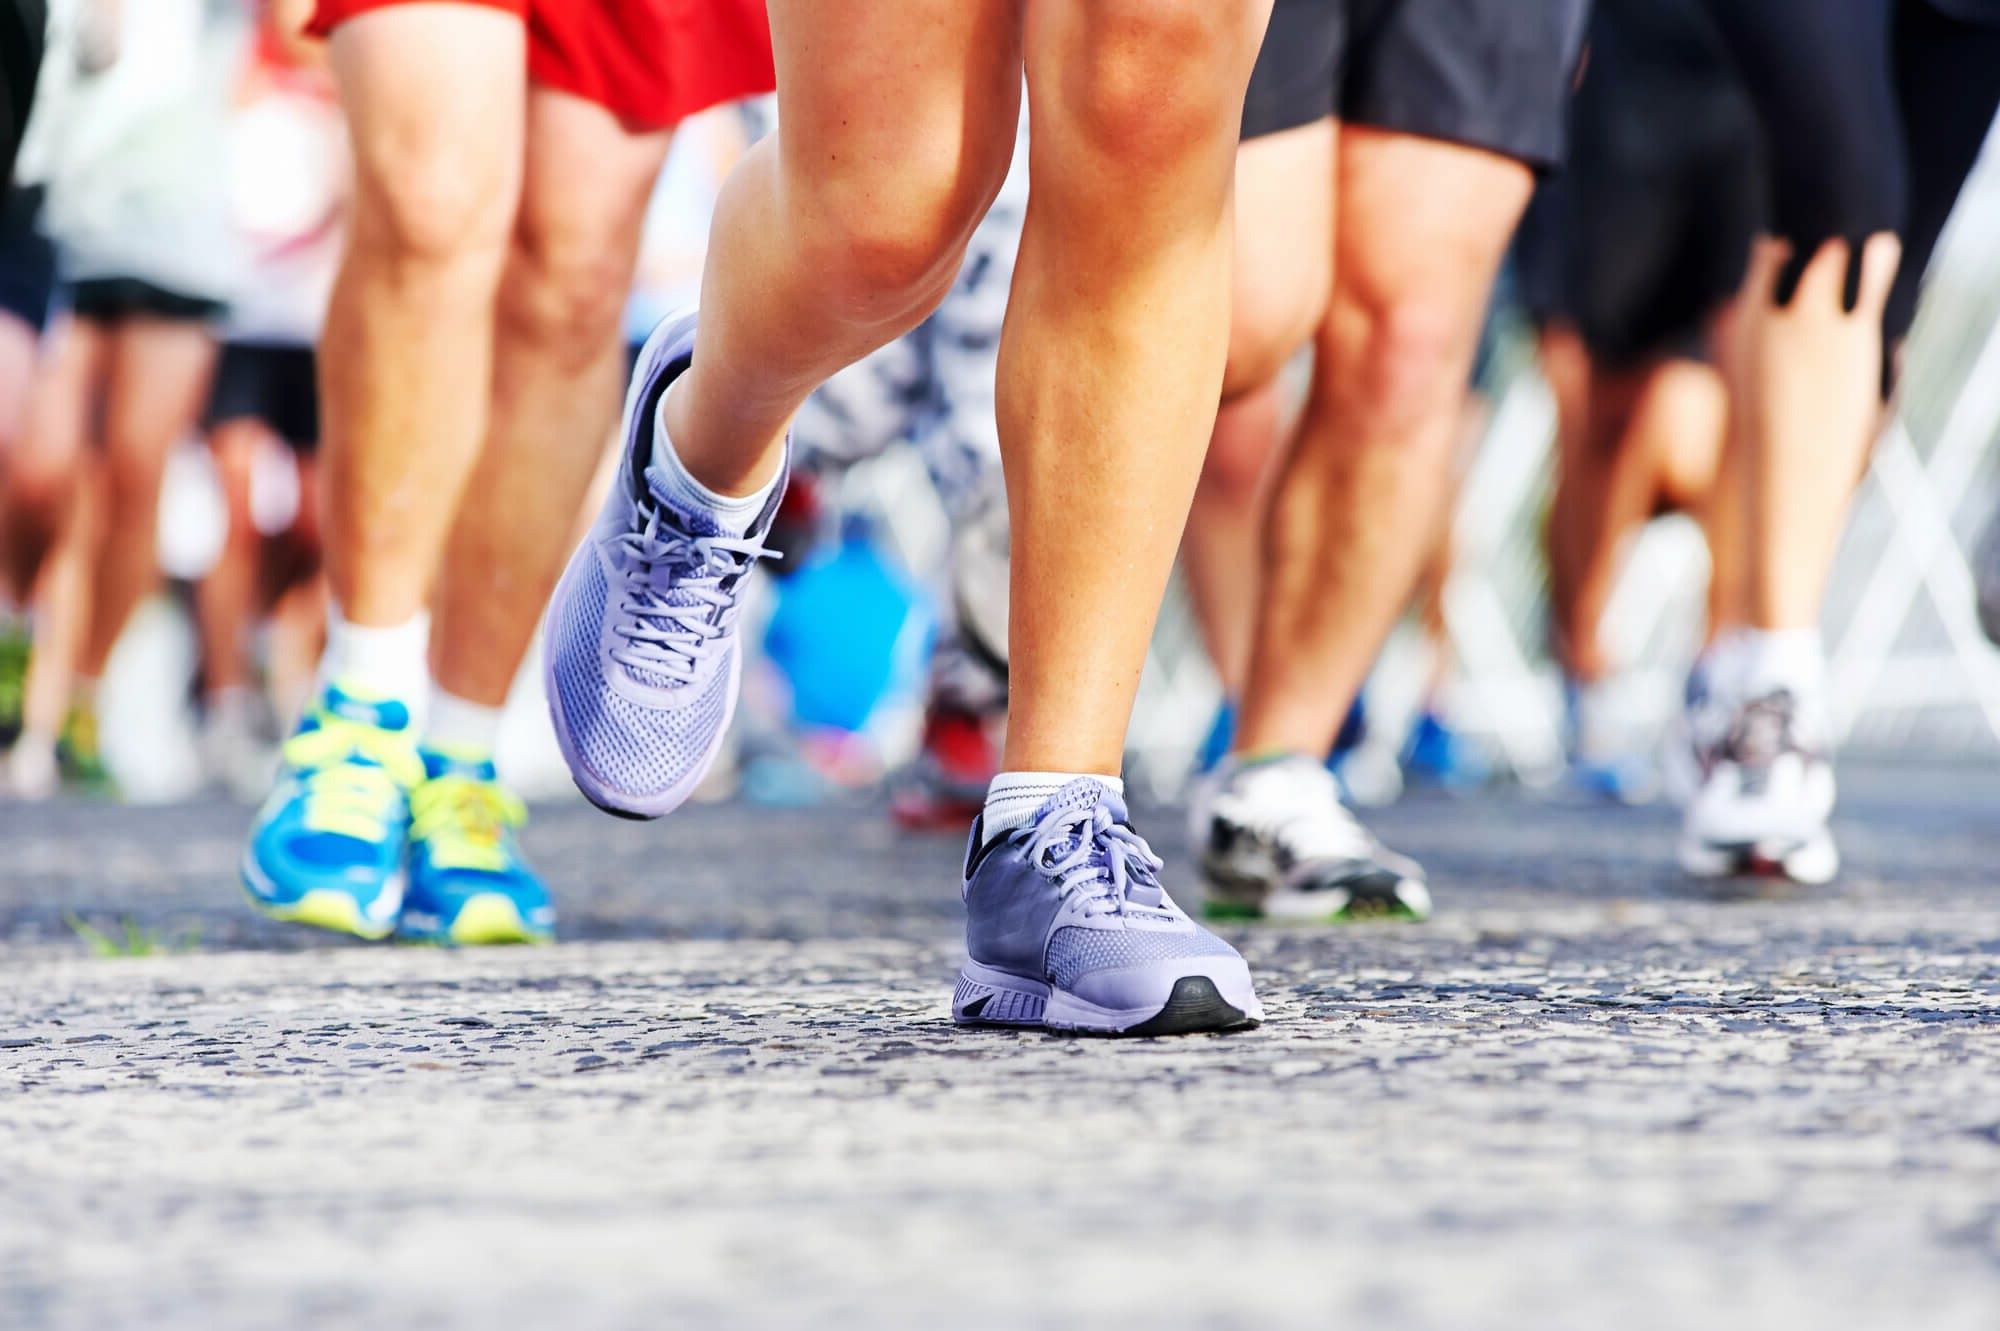 10-week Training Plan To Achieve A Sub-1:50 Half-marathon